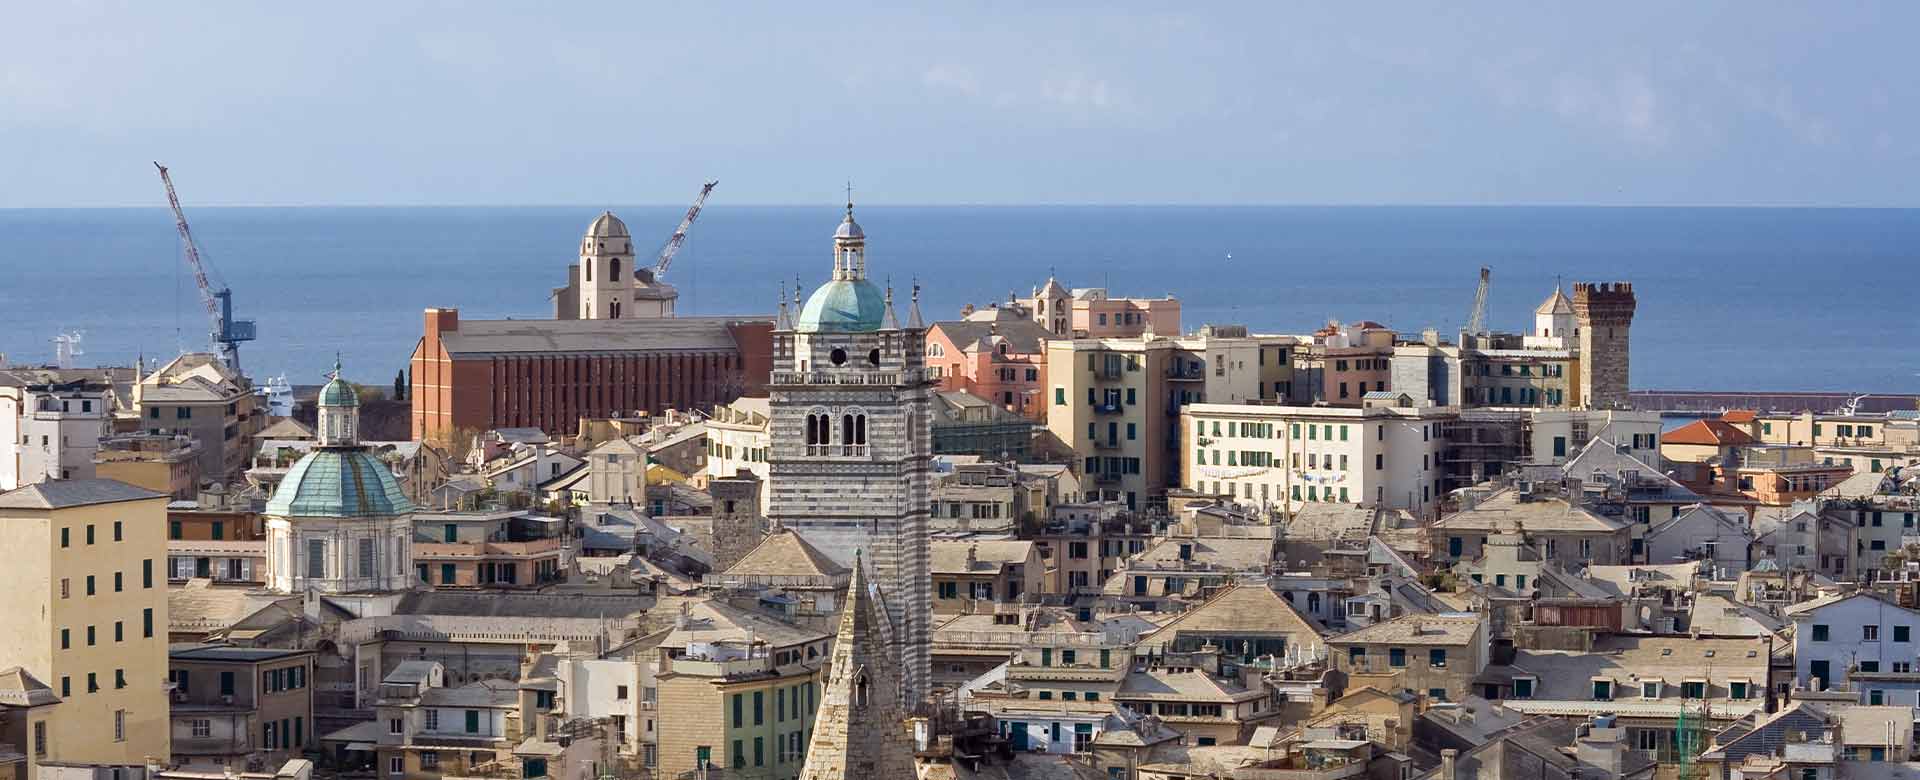 Una veduta di Genova vecchia